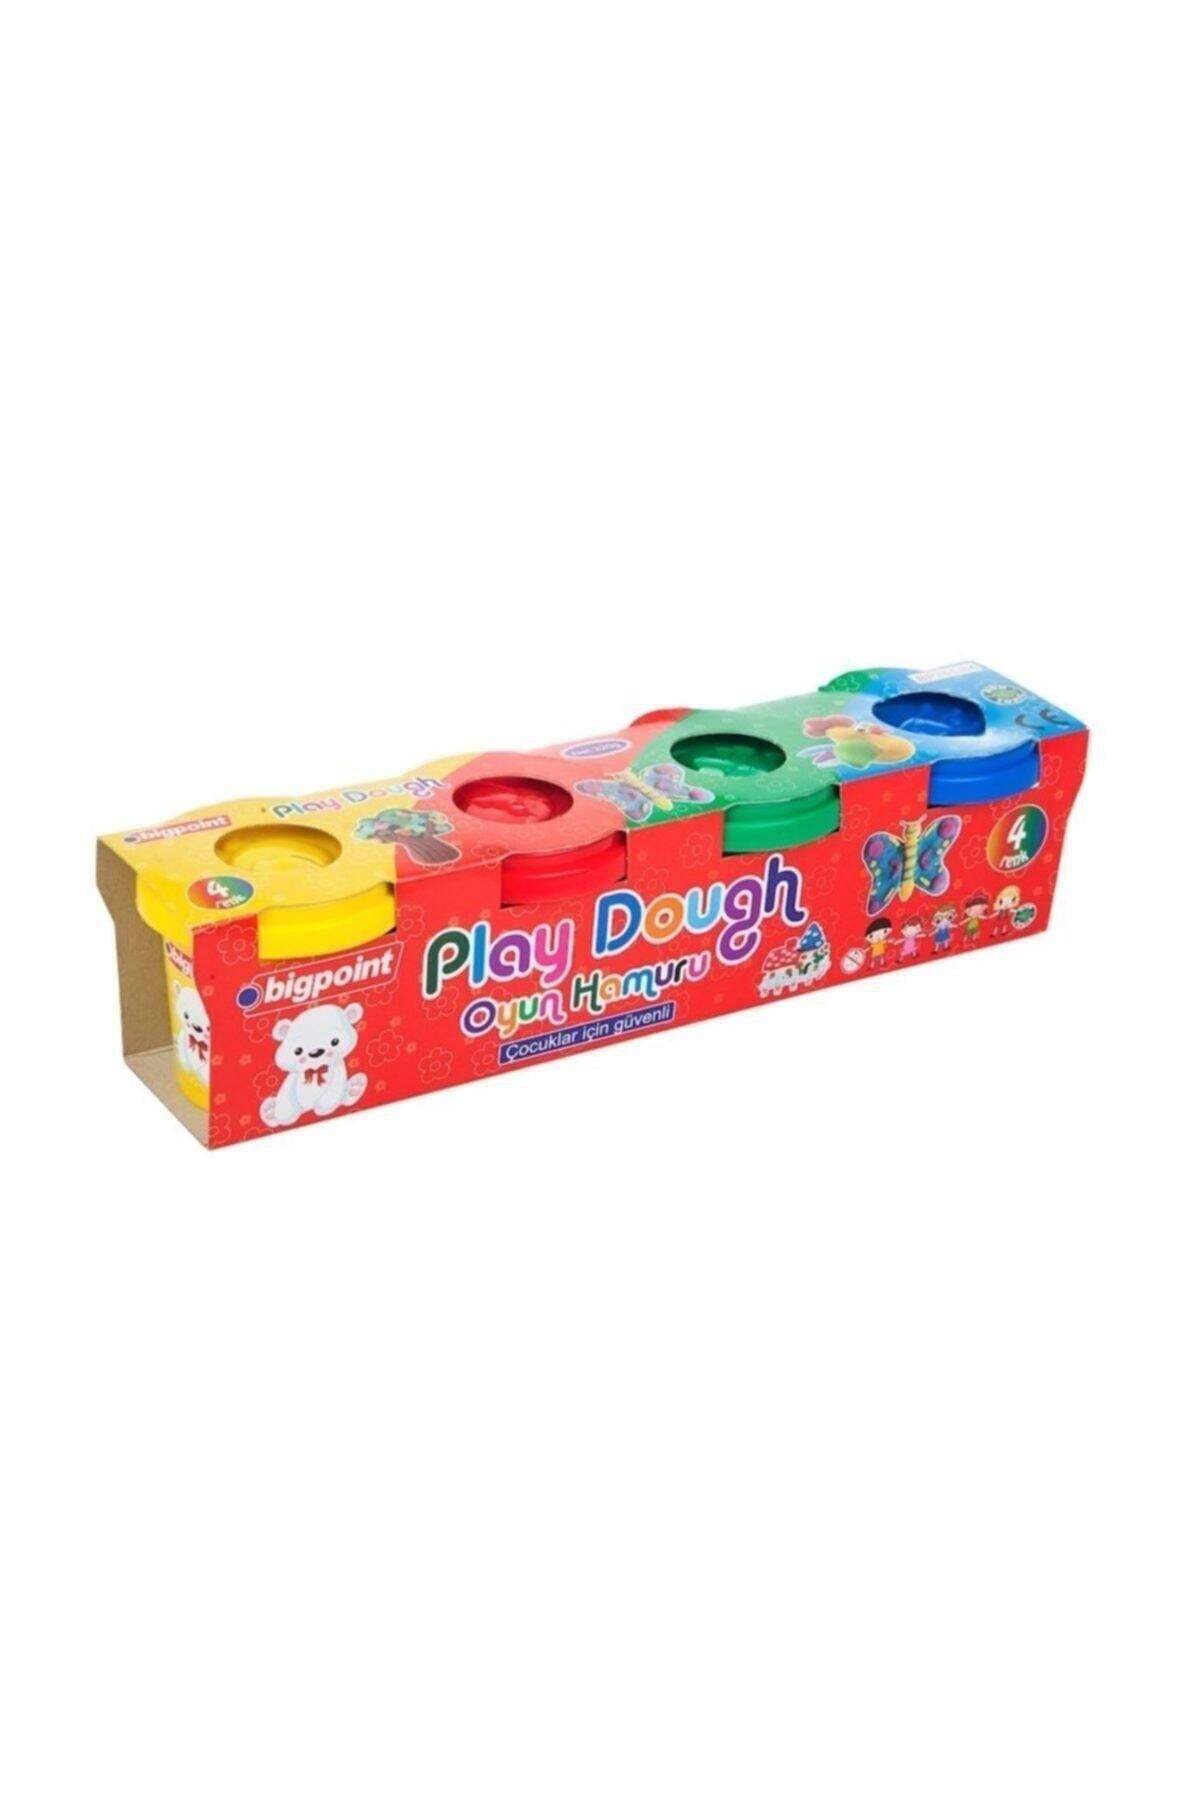 Bigpoint Play-dough Oyun Hamuru - 4 Renk 5560329